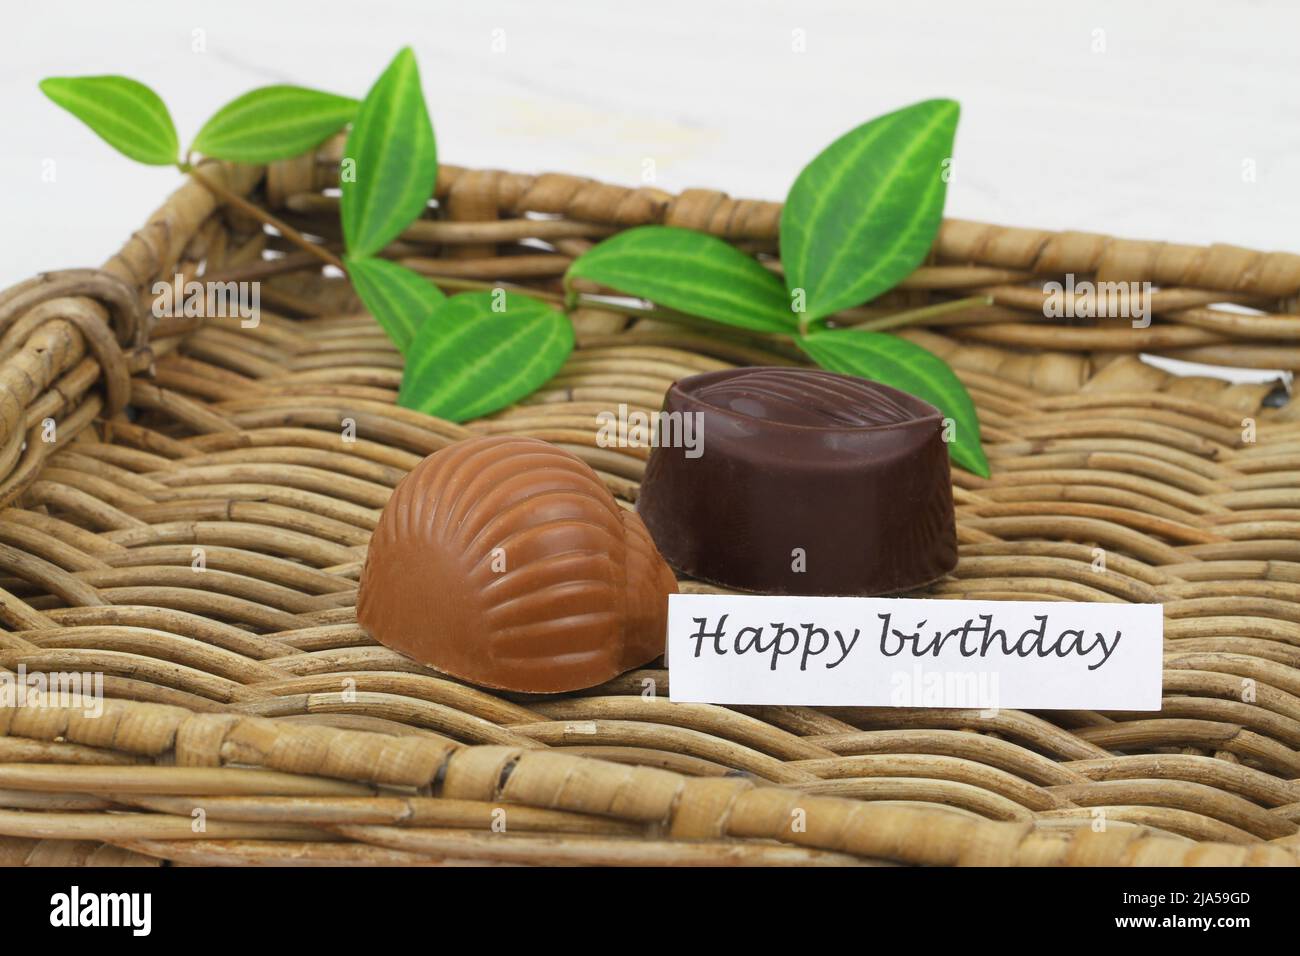 Happy birthday card with milky and dark chocolates on wicker tray Stock Photo